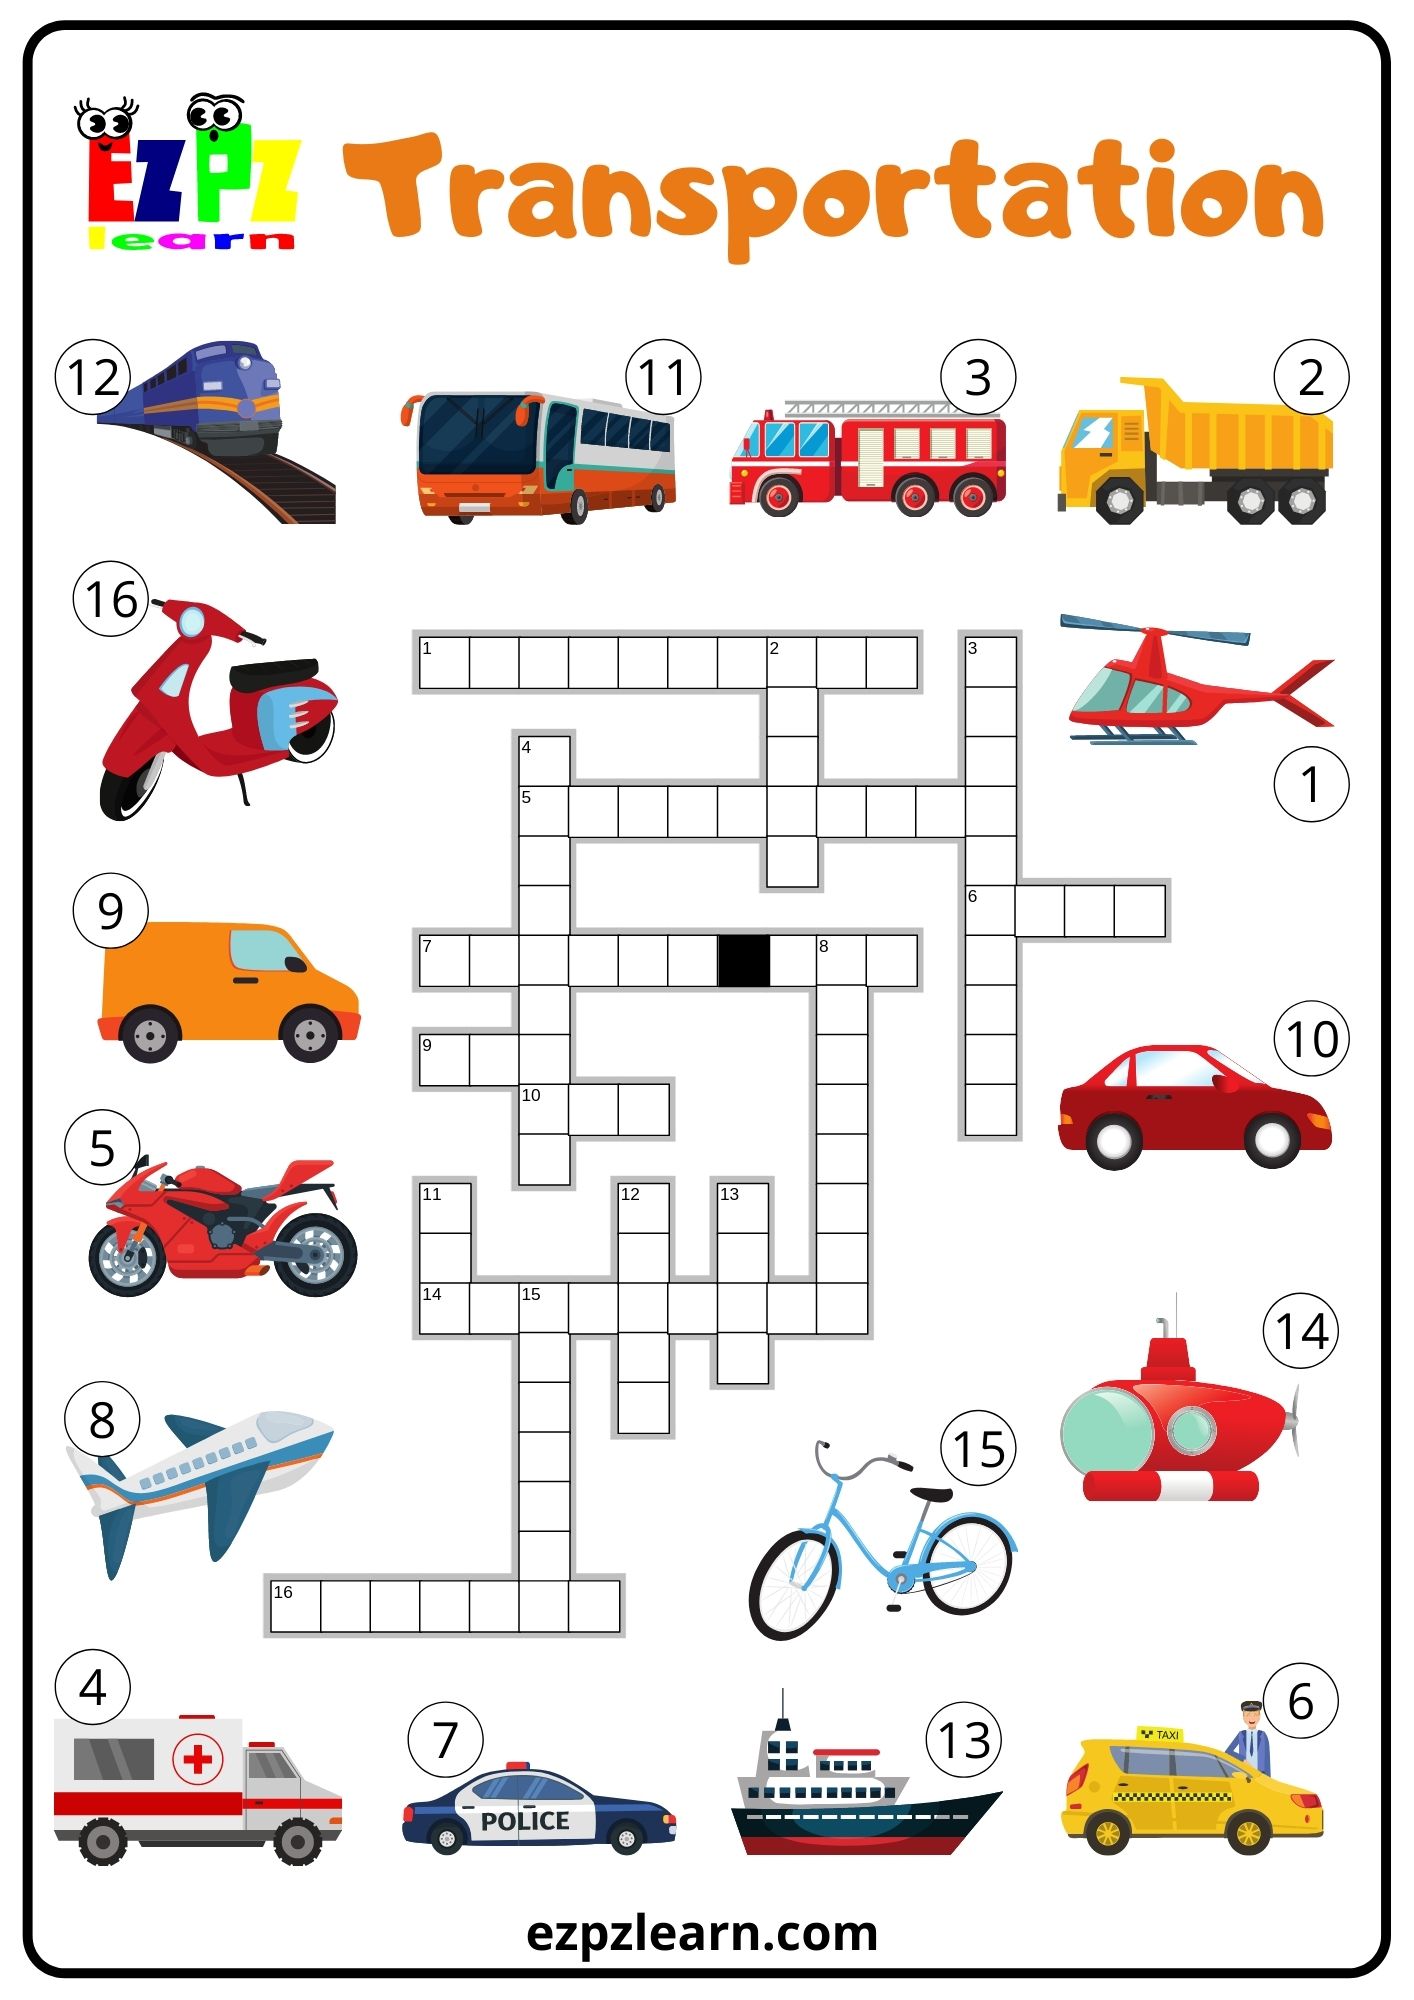 Transportation Crossword Ezpzlearn com